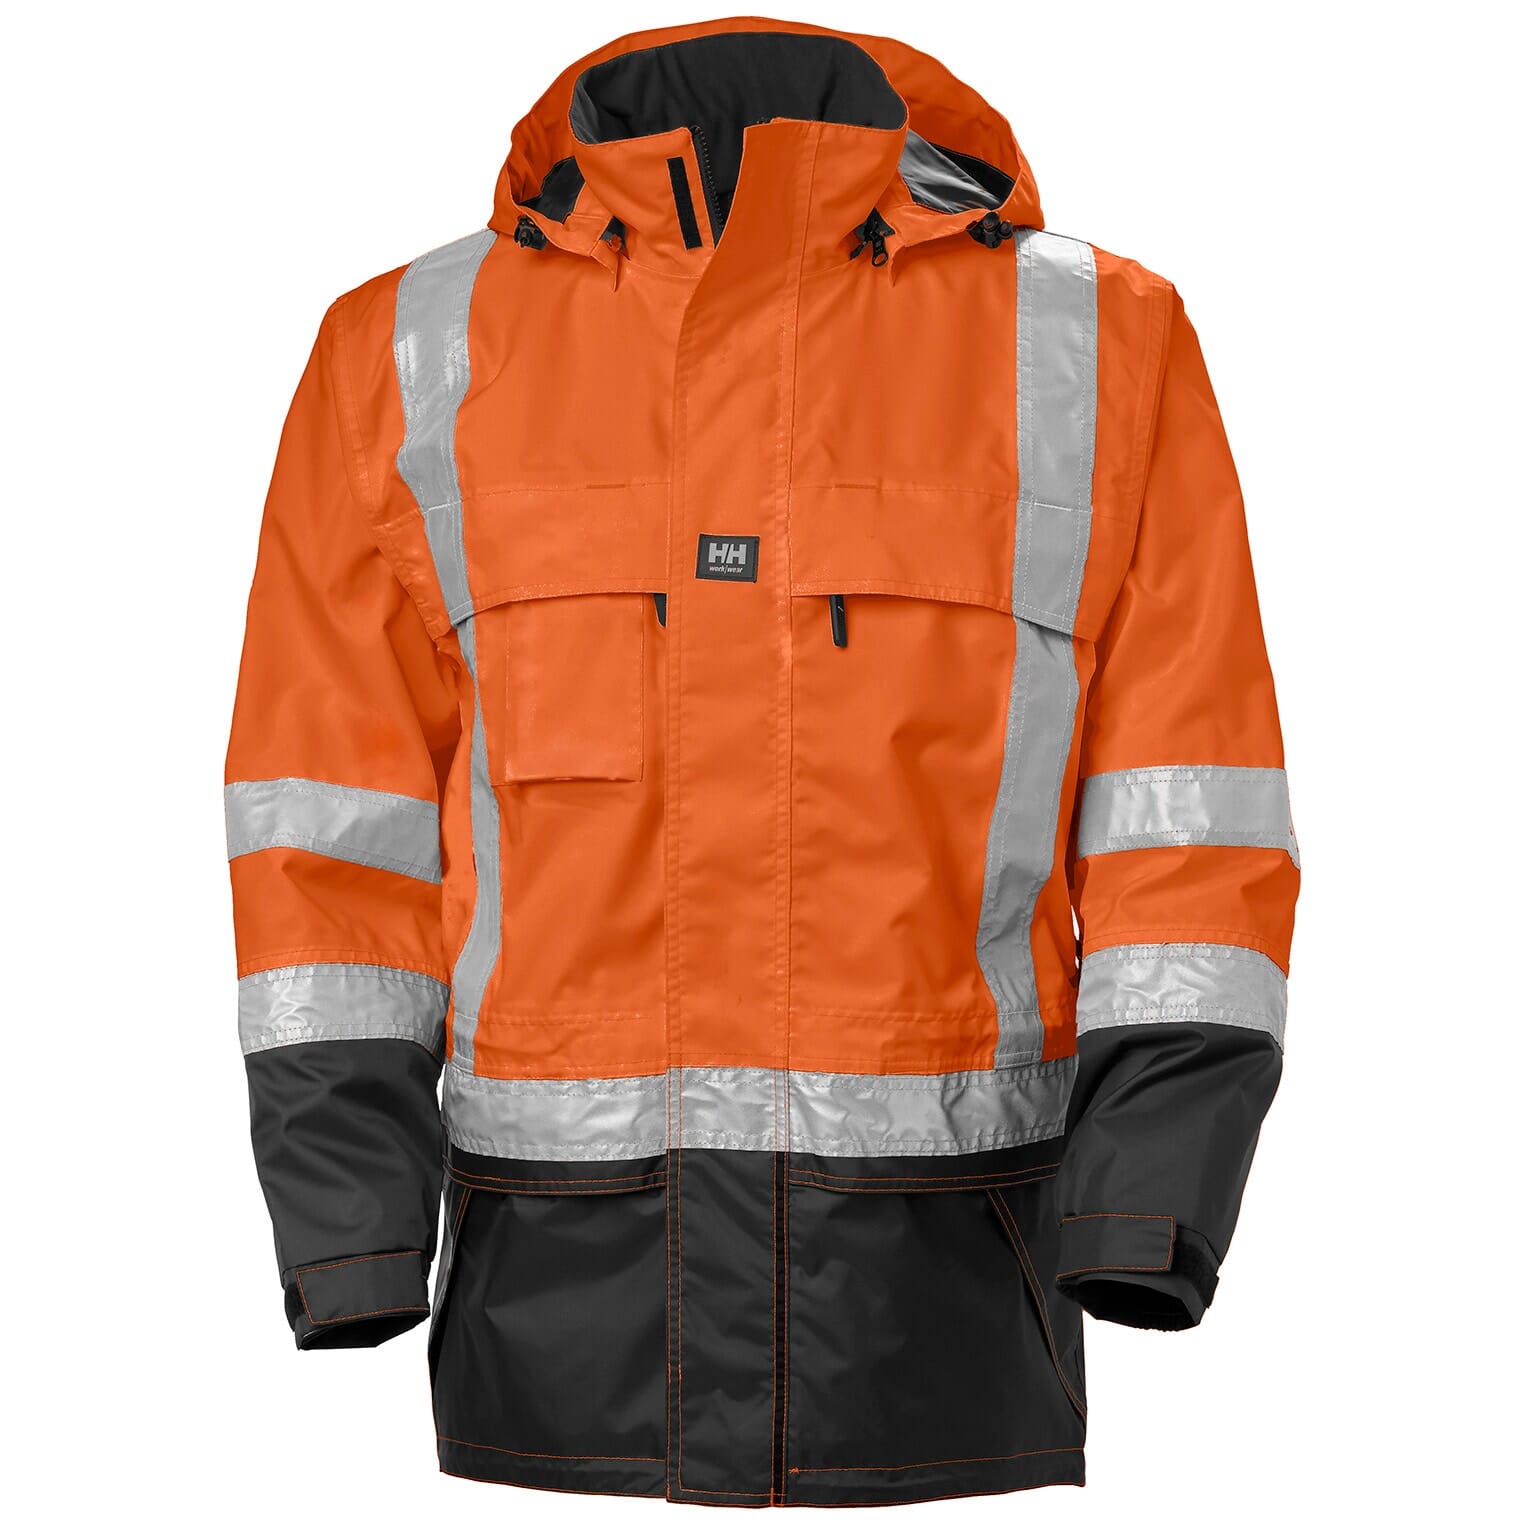 Manchester Waterproof Shell Work Jacket, HH Workwear US